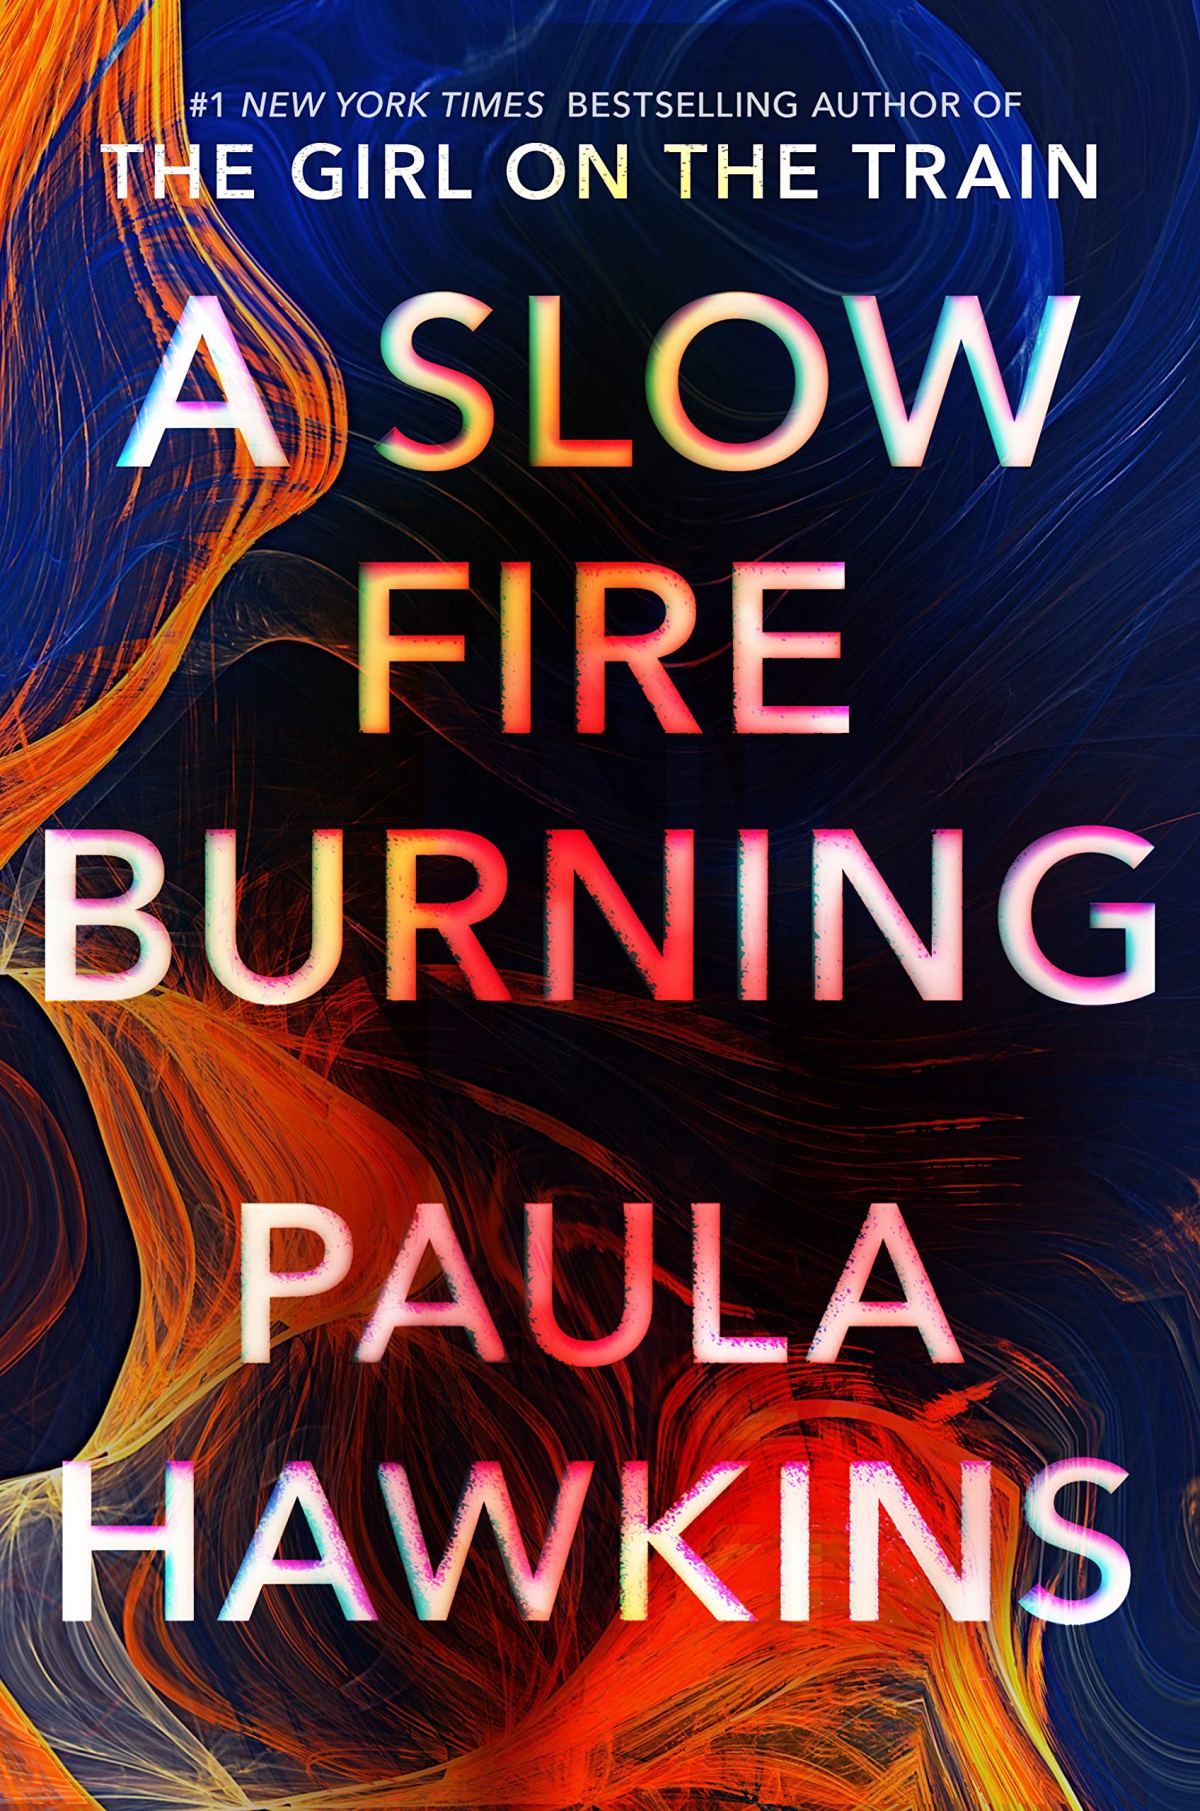 Book 117 – A Slow Fire Burning by Paula Hawkins